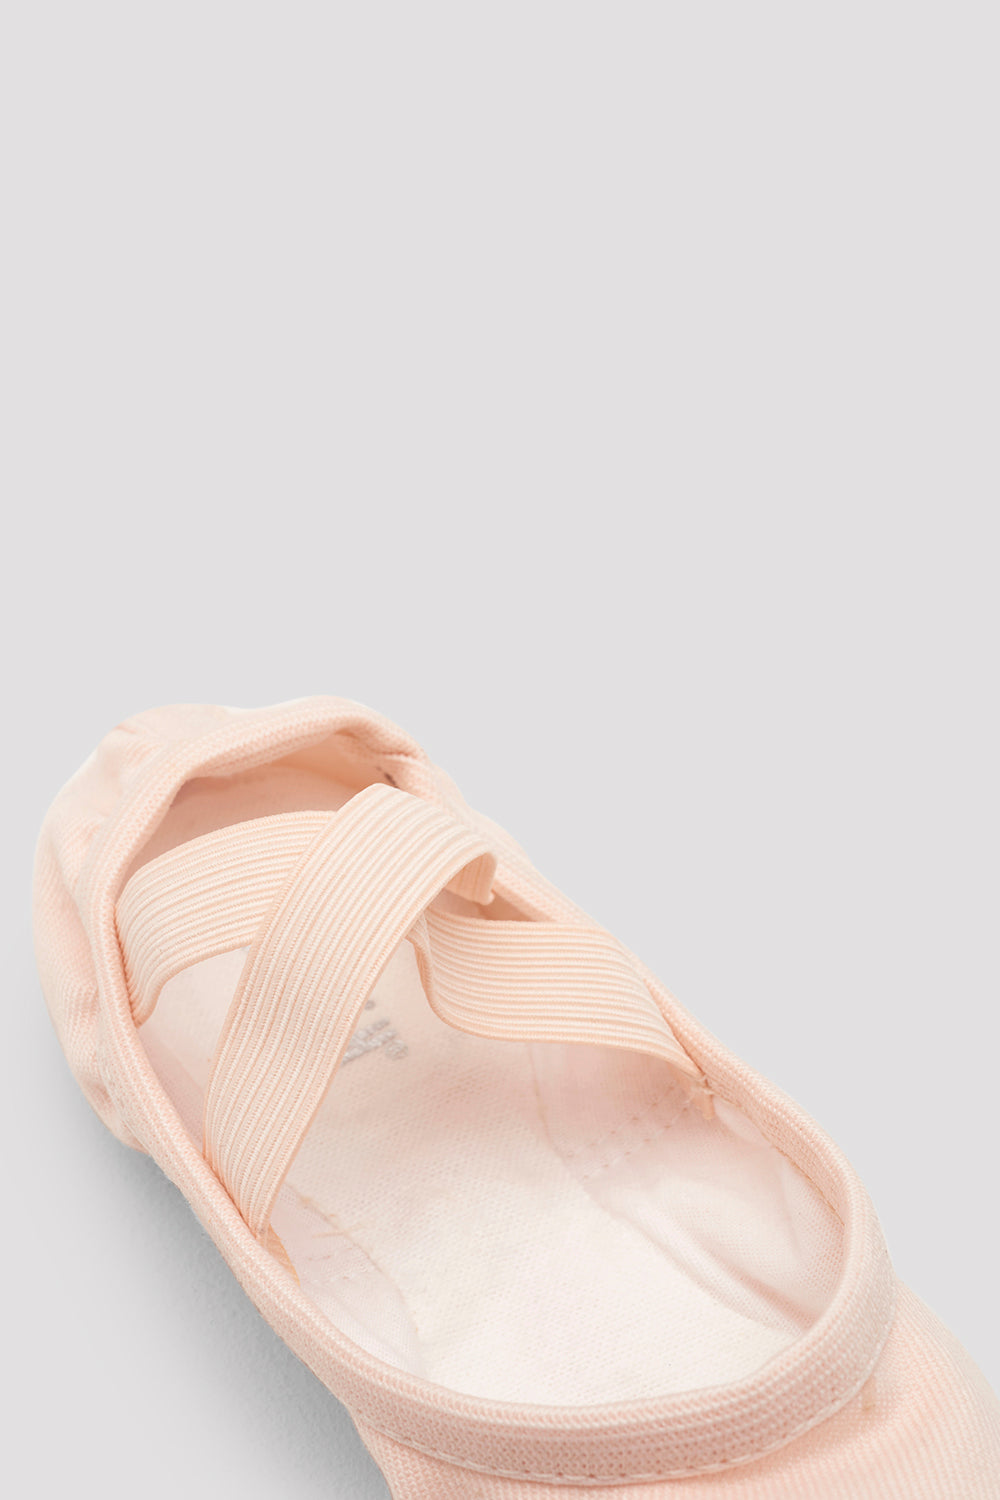 BLOCH Dance Women's Performa Shoe, Theatrical Pink, 3.5 D US